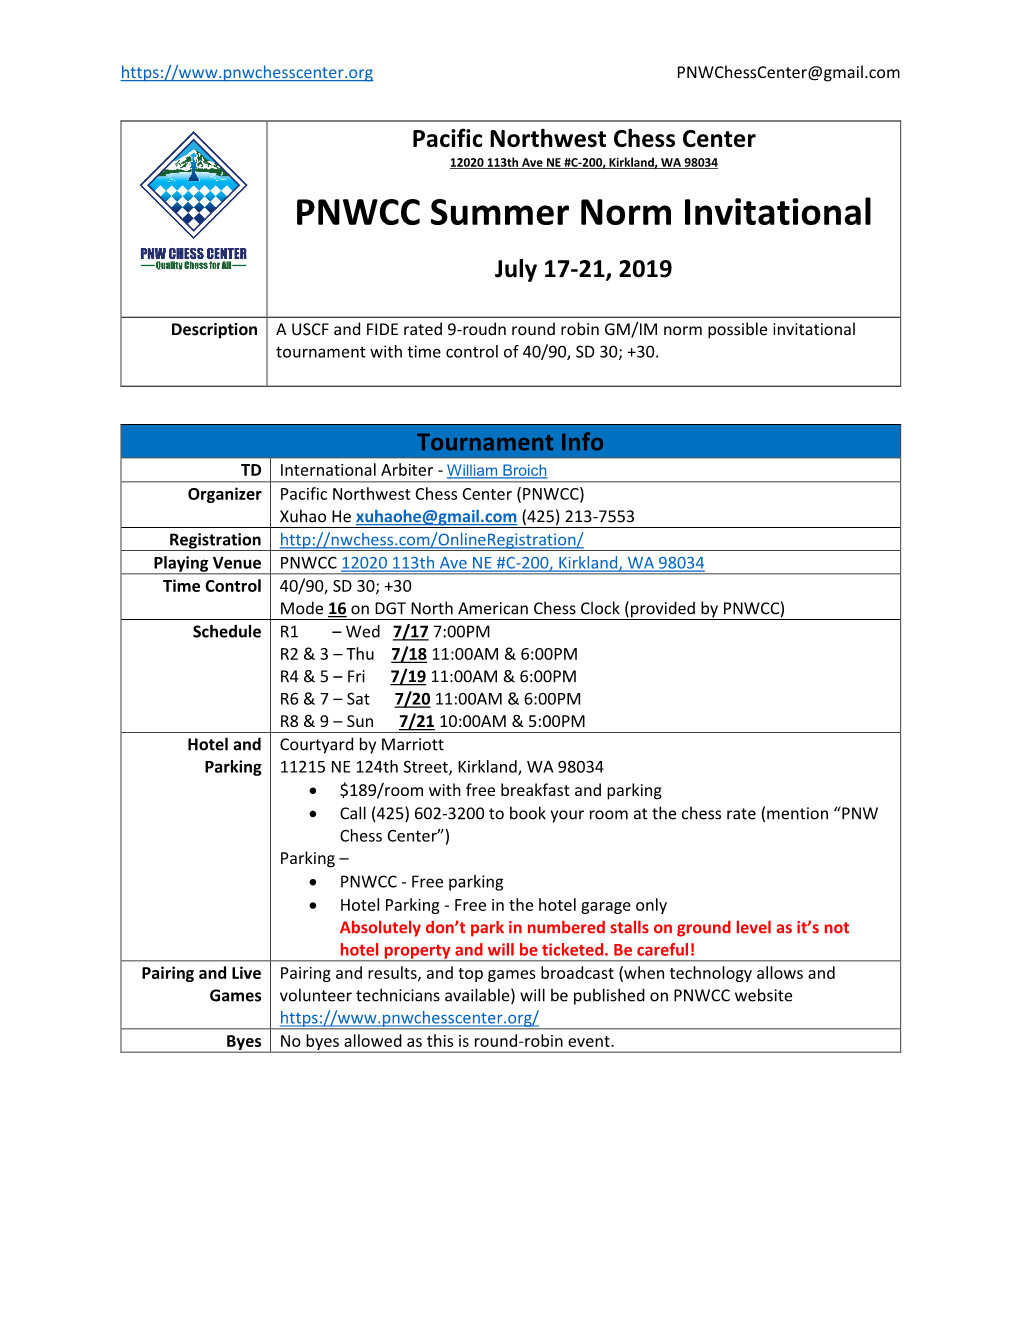 PNWCC Summer Norm Invitational